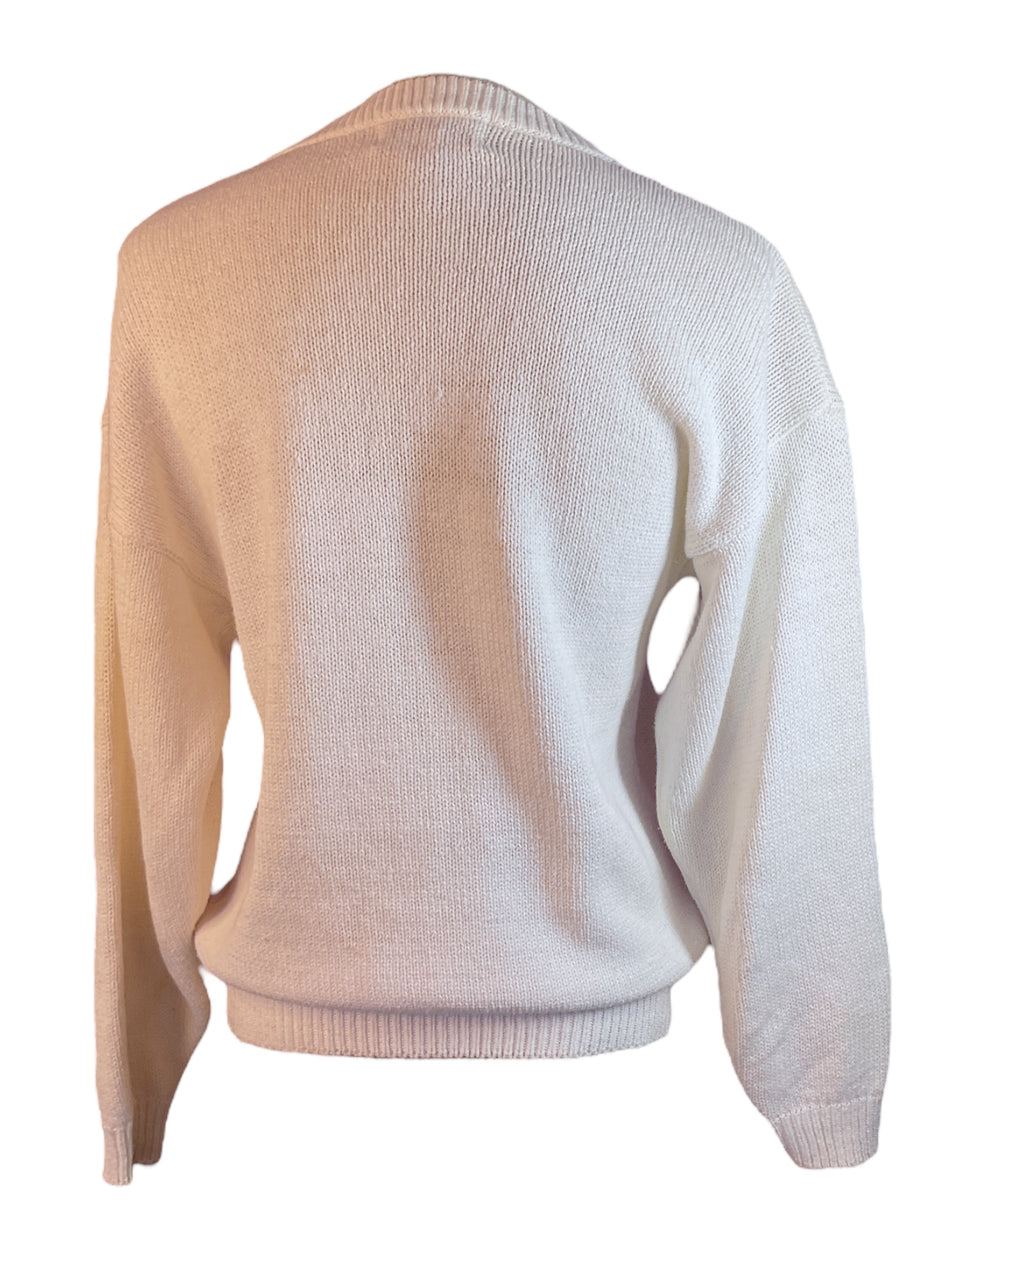 White Western Collection Rhinestone Sweater, M